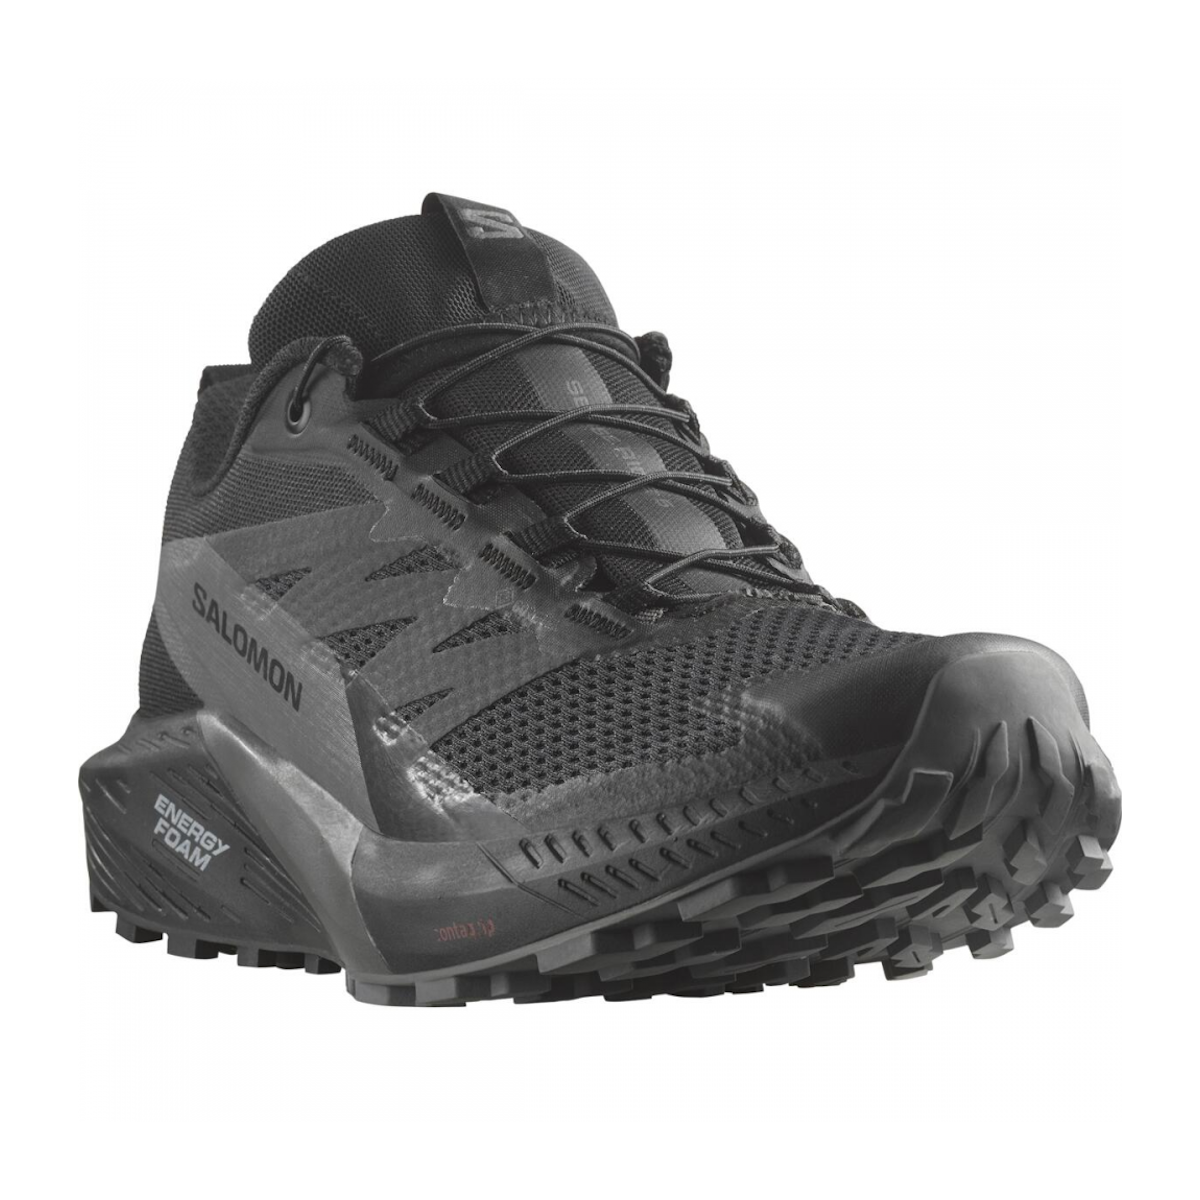 SALOMON SENSE RIDE 5 GTX W trail running shoes - black/dark grey